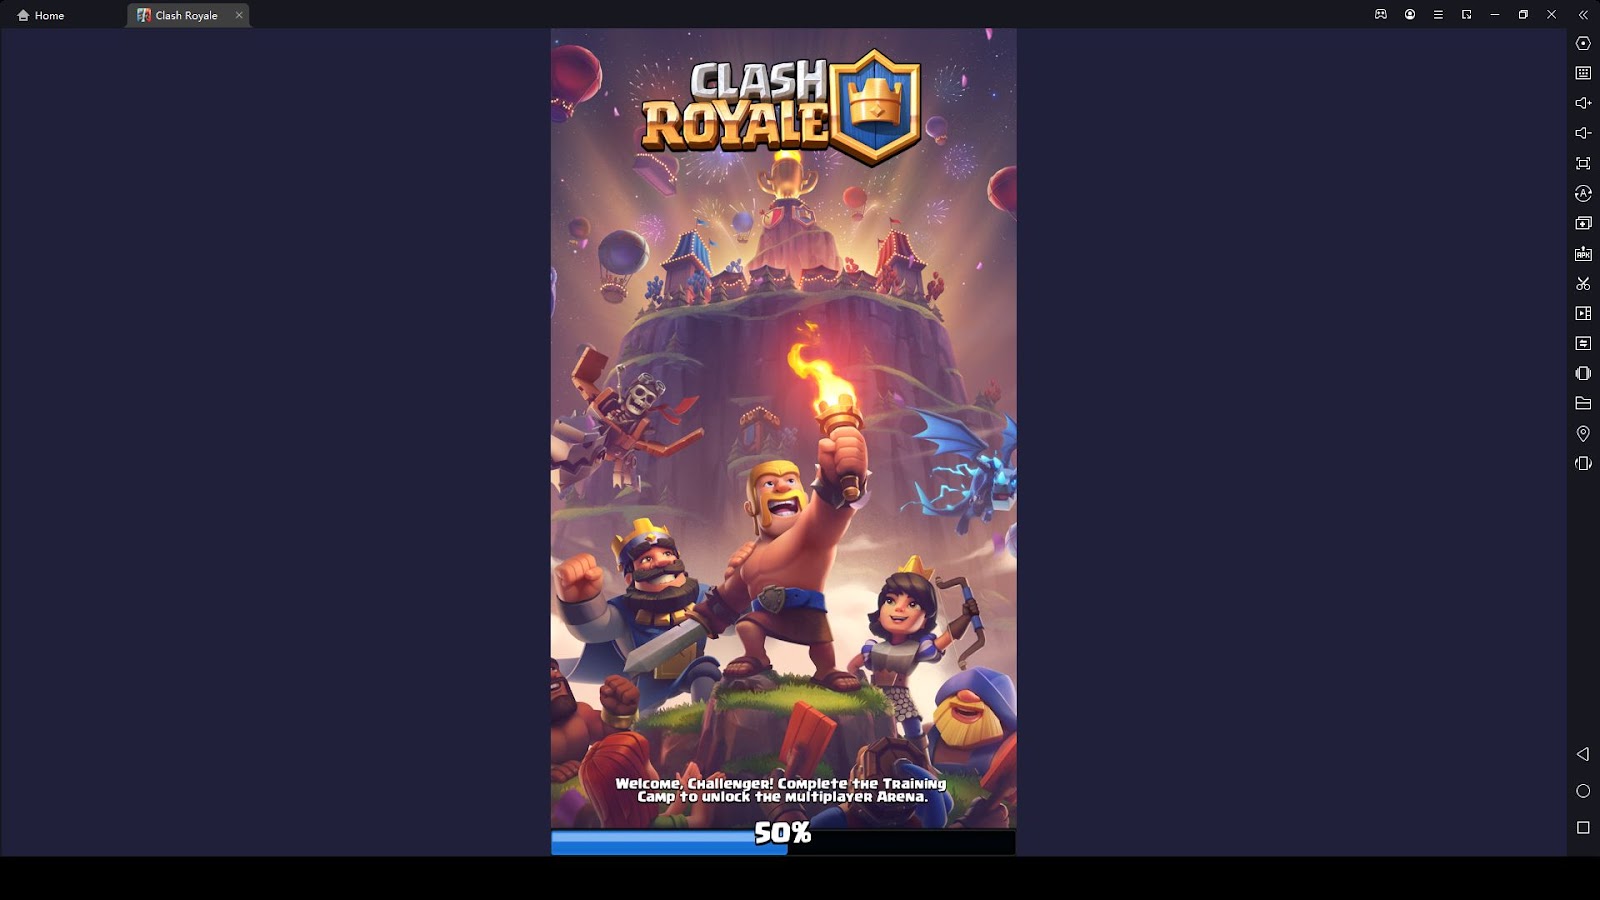 rate the clash royale deck (6000 trophies)